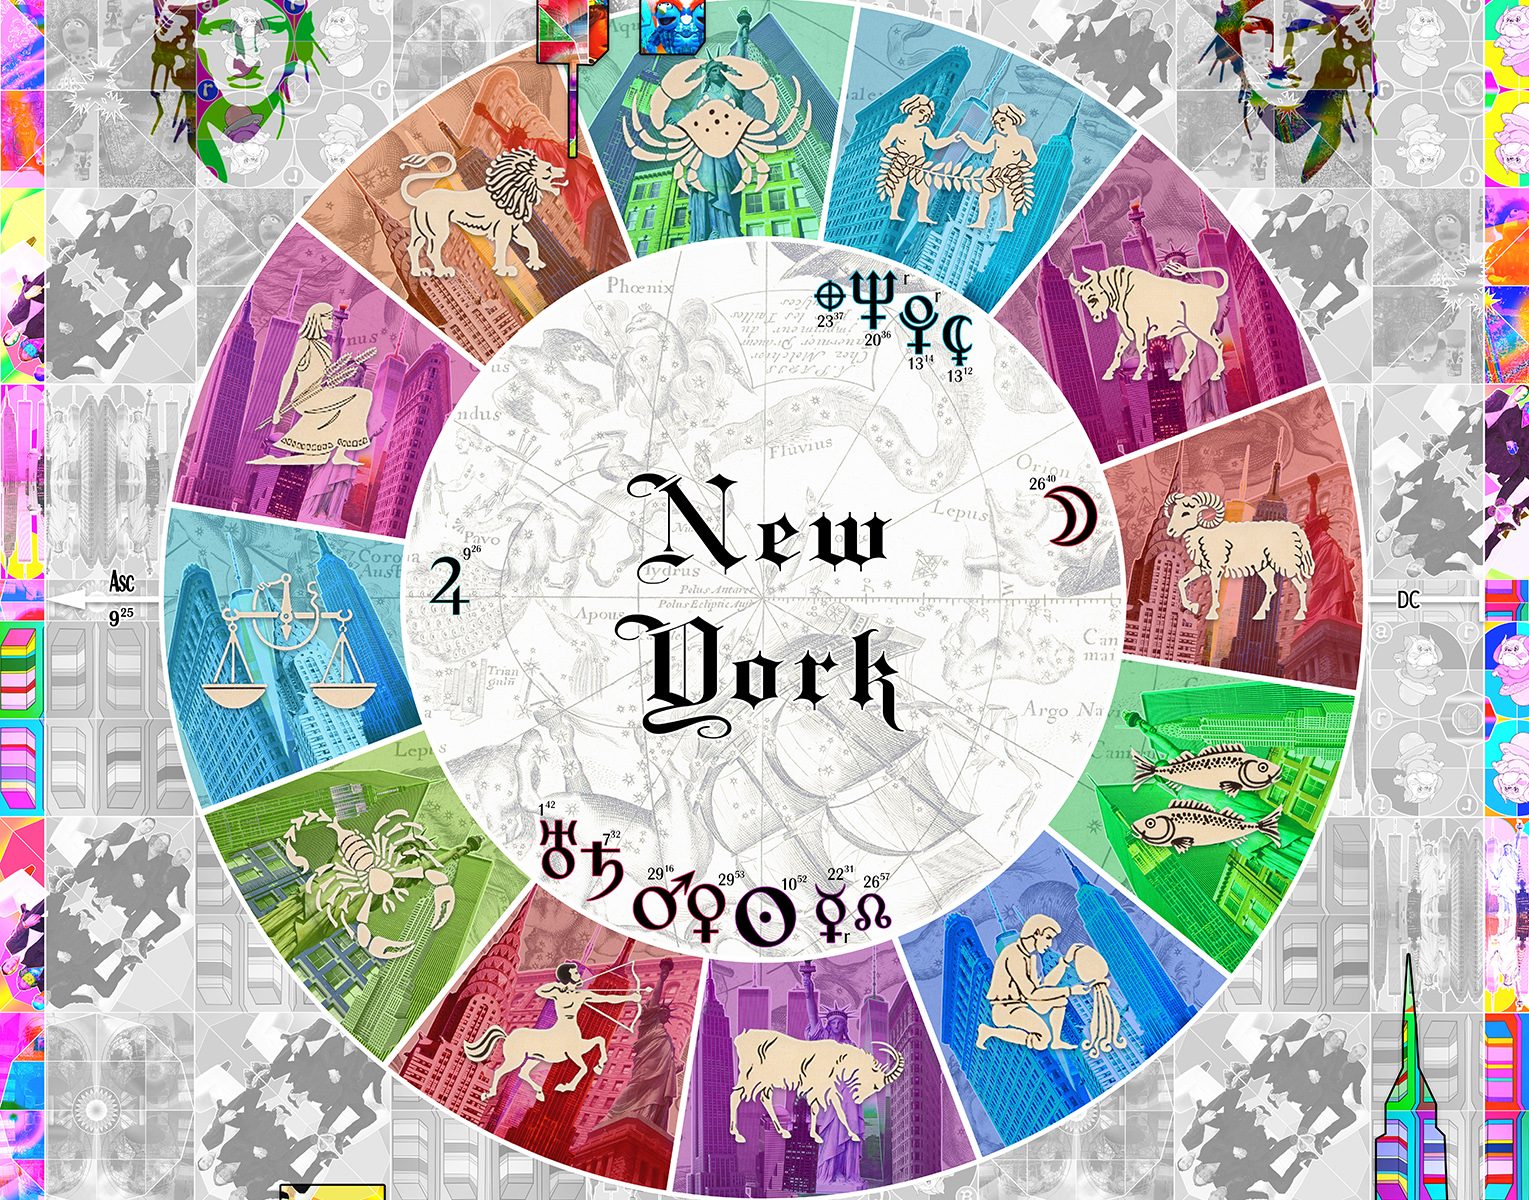 Astrology chart of New York